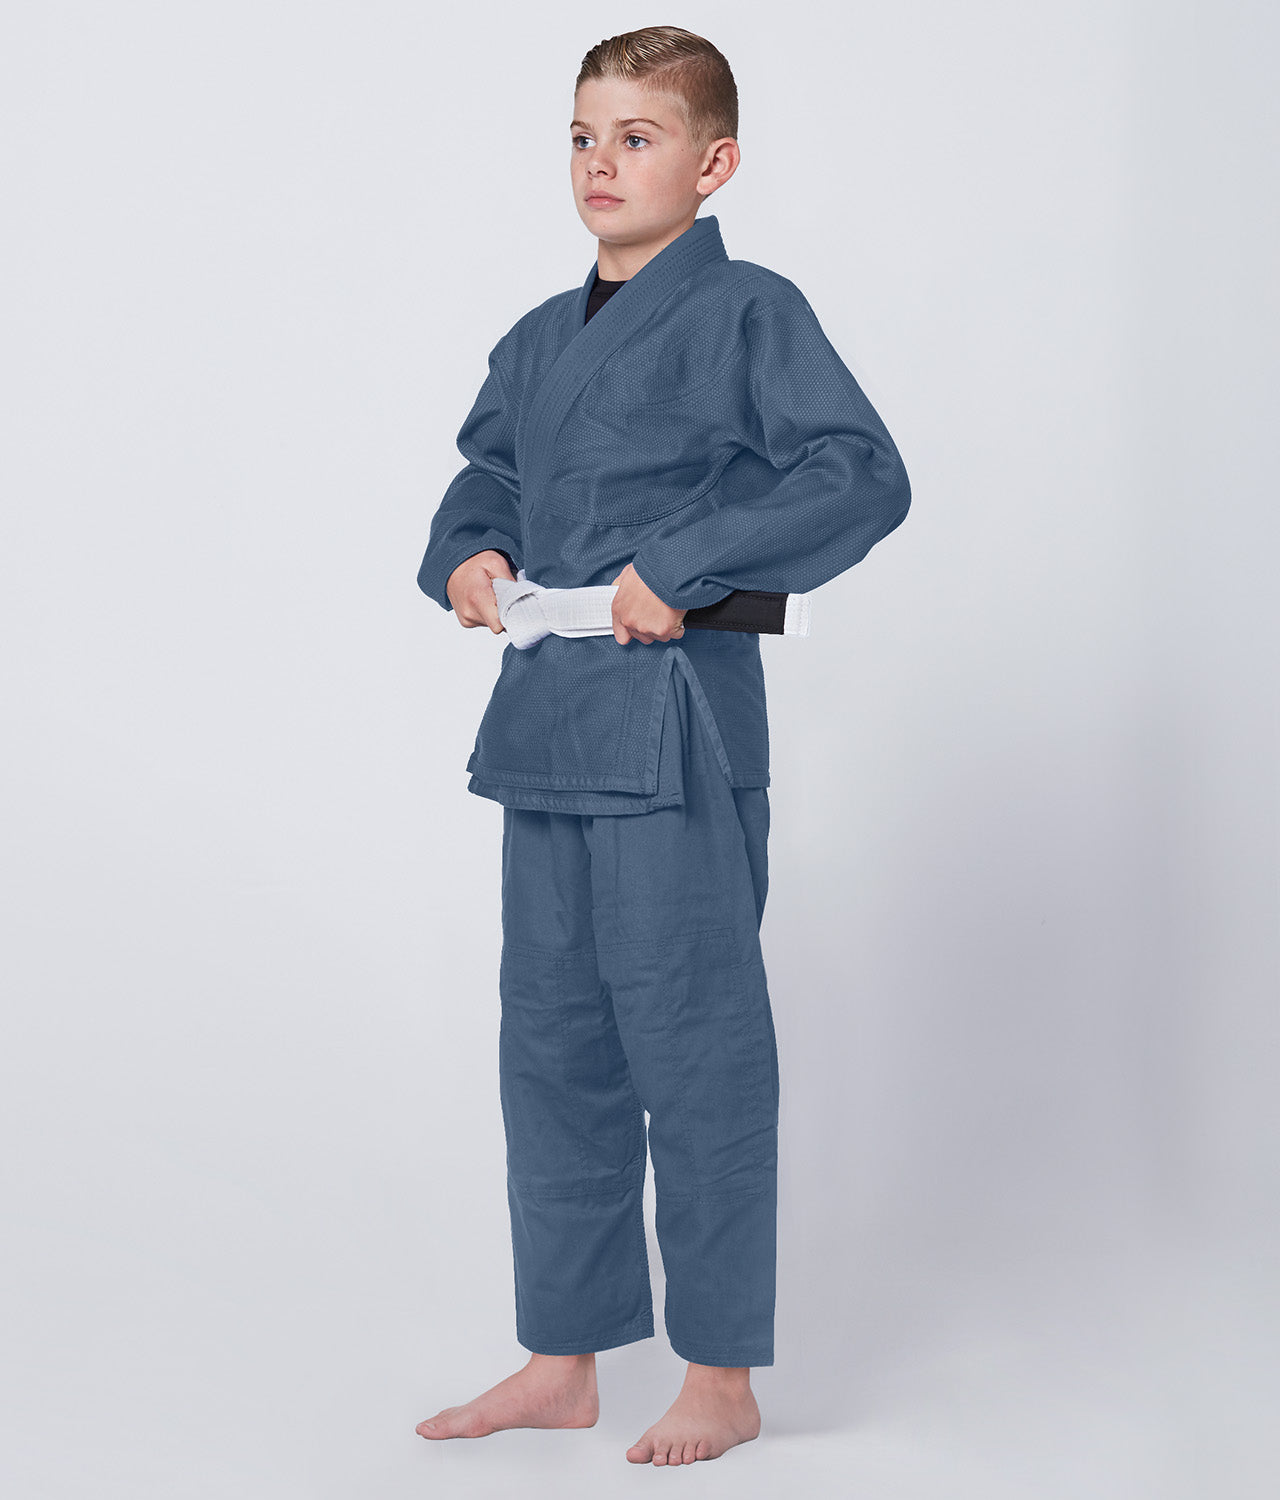 Elite Sports Kids' Essential Gray Brazilian Jiu Jitsu BJJ Gi